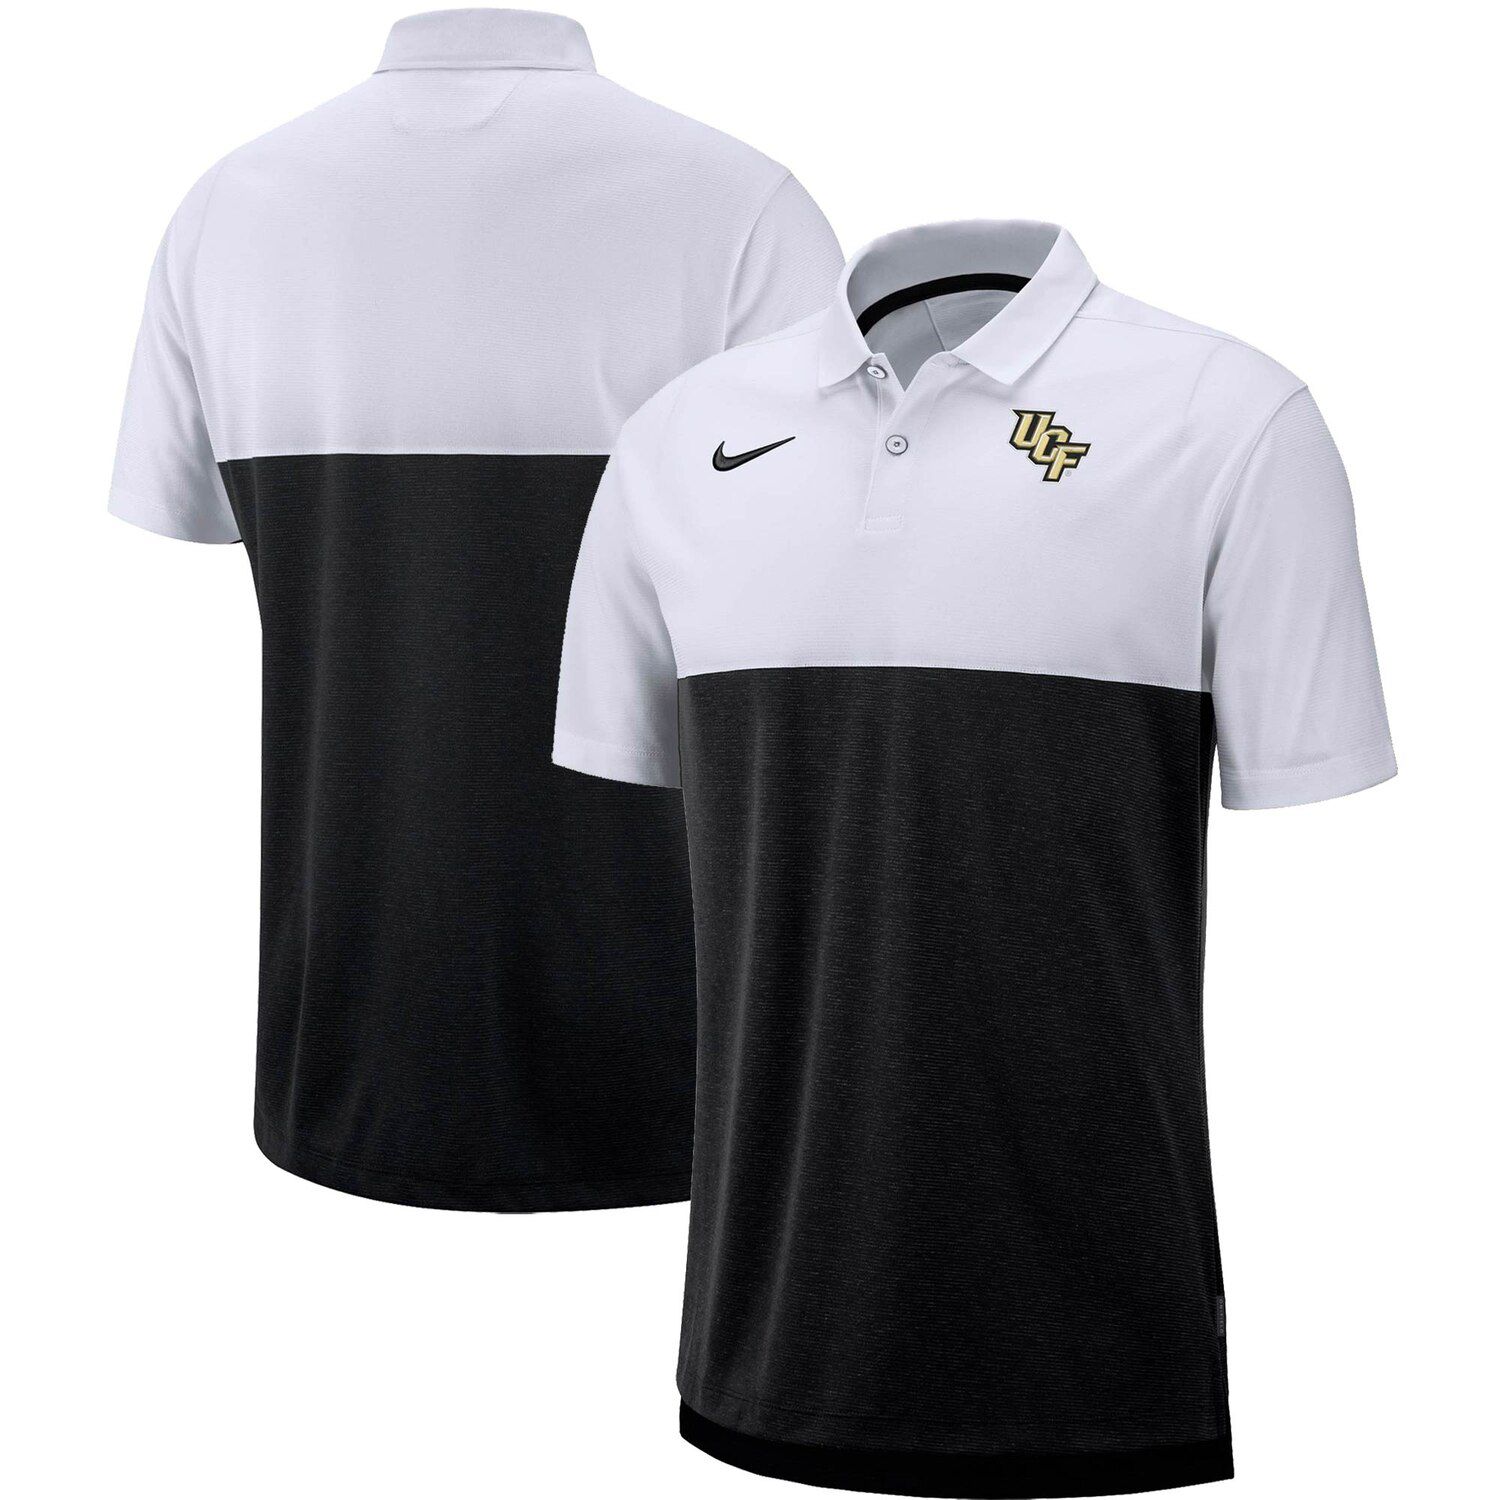 Men's Nike Black/White UCF Knights 